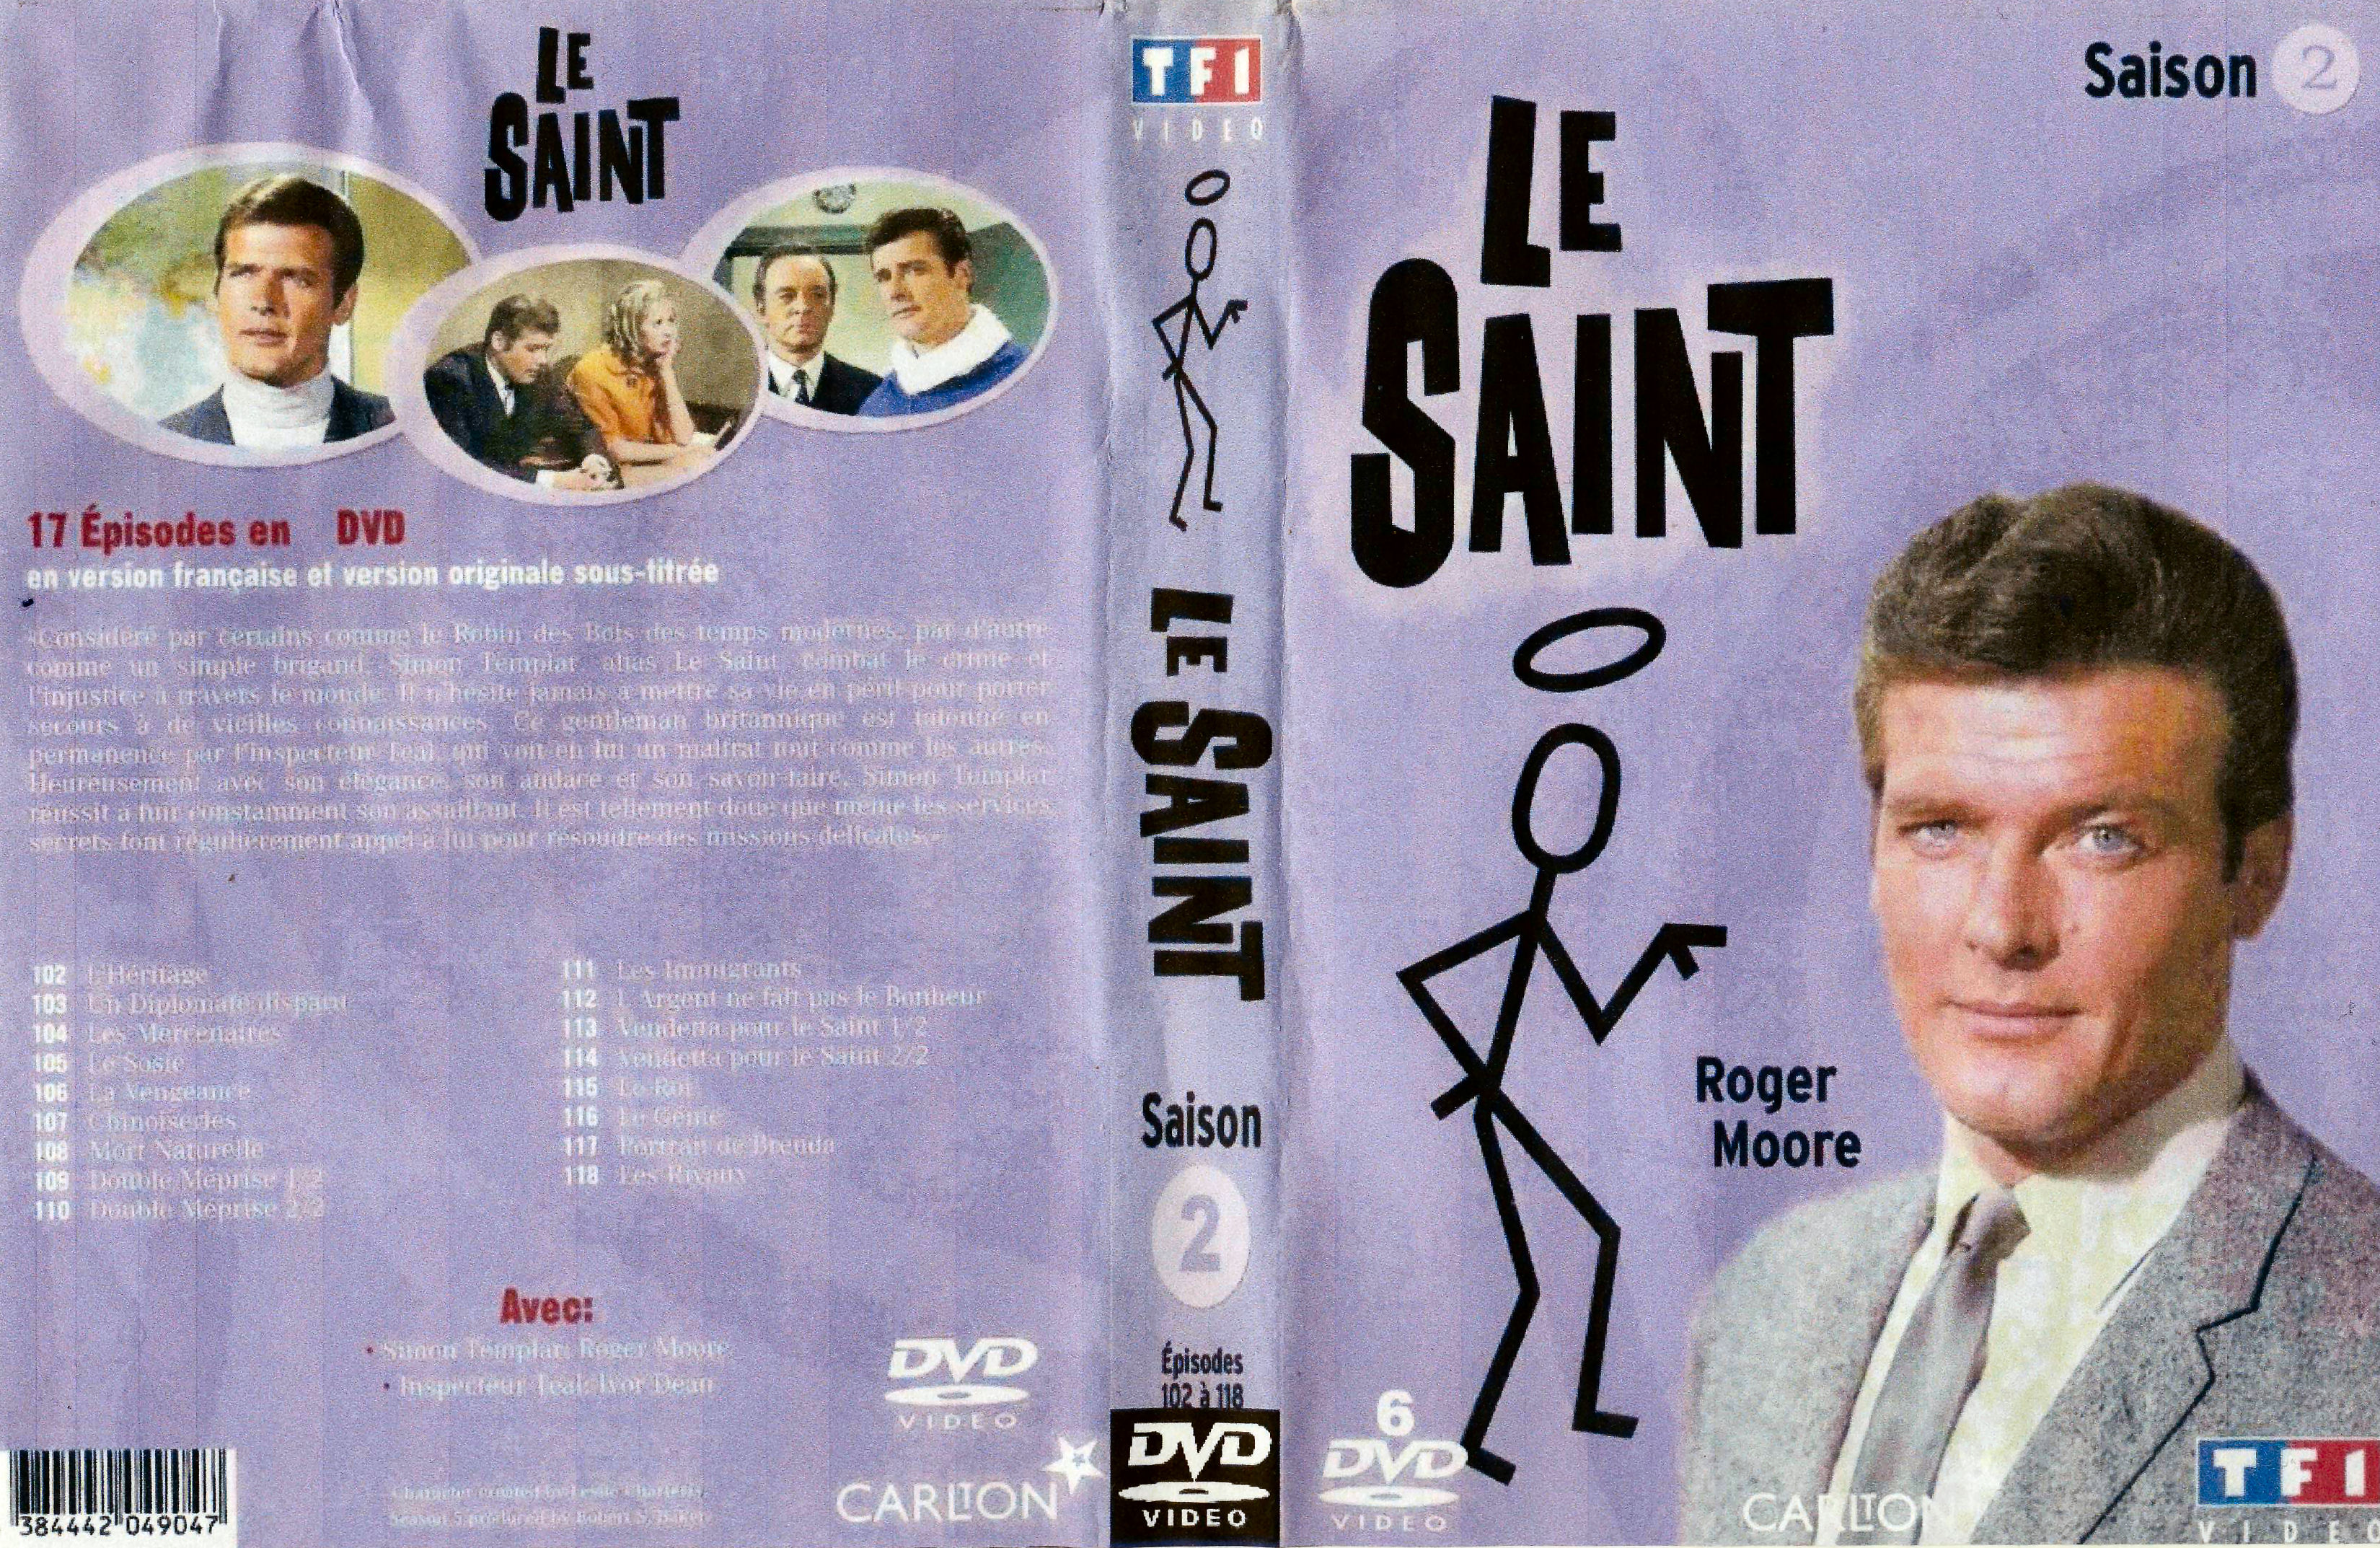 REPOST The Saint Seizoen 2 ( 1963 ) DvD 8